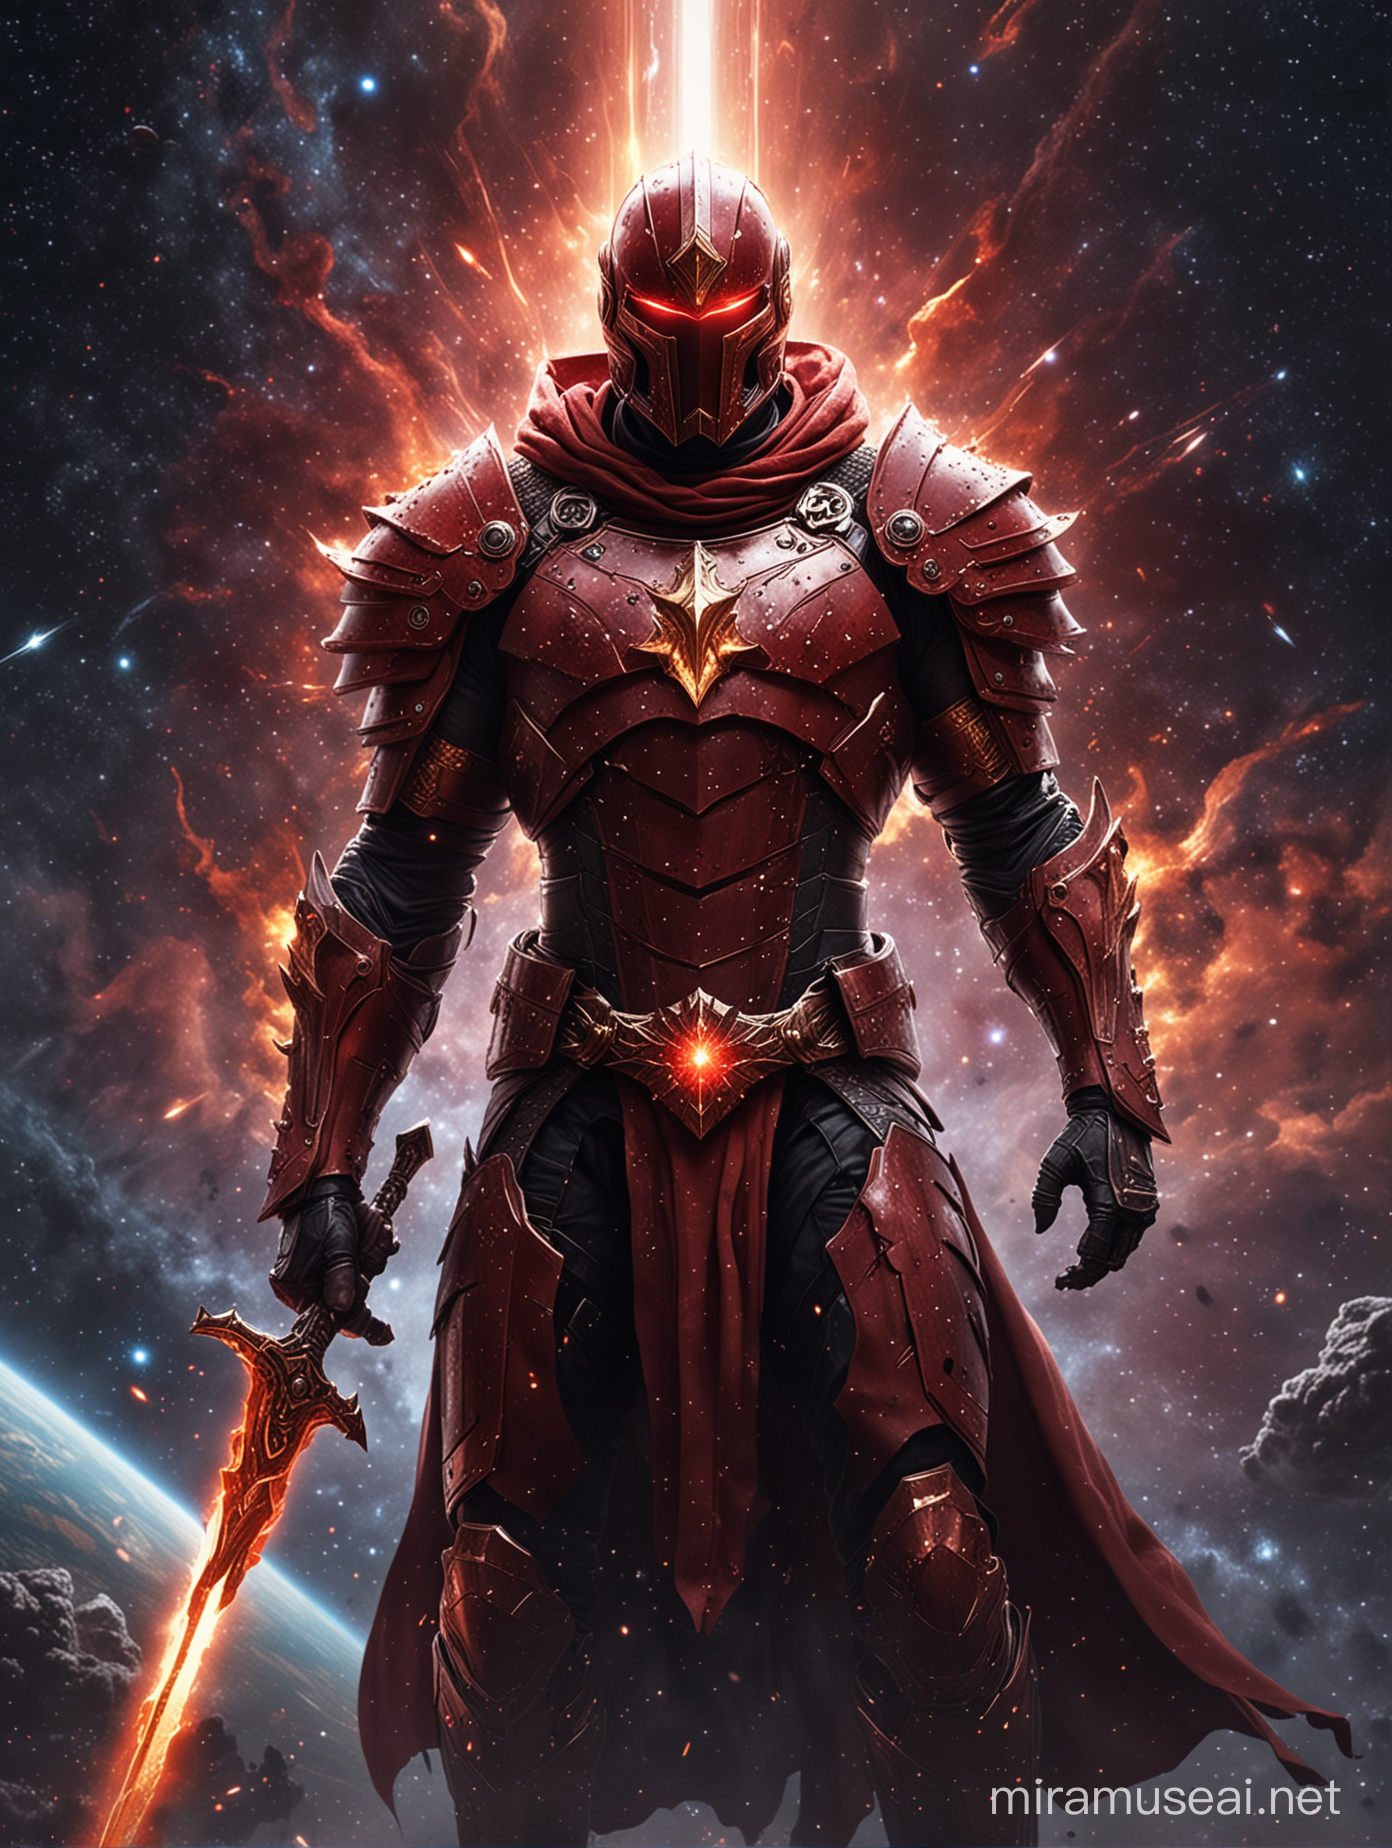 Red Cosmic Warrior Defending the Universe with Blazing Sword